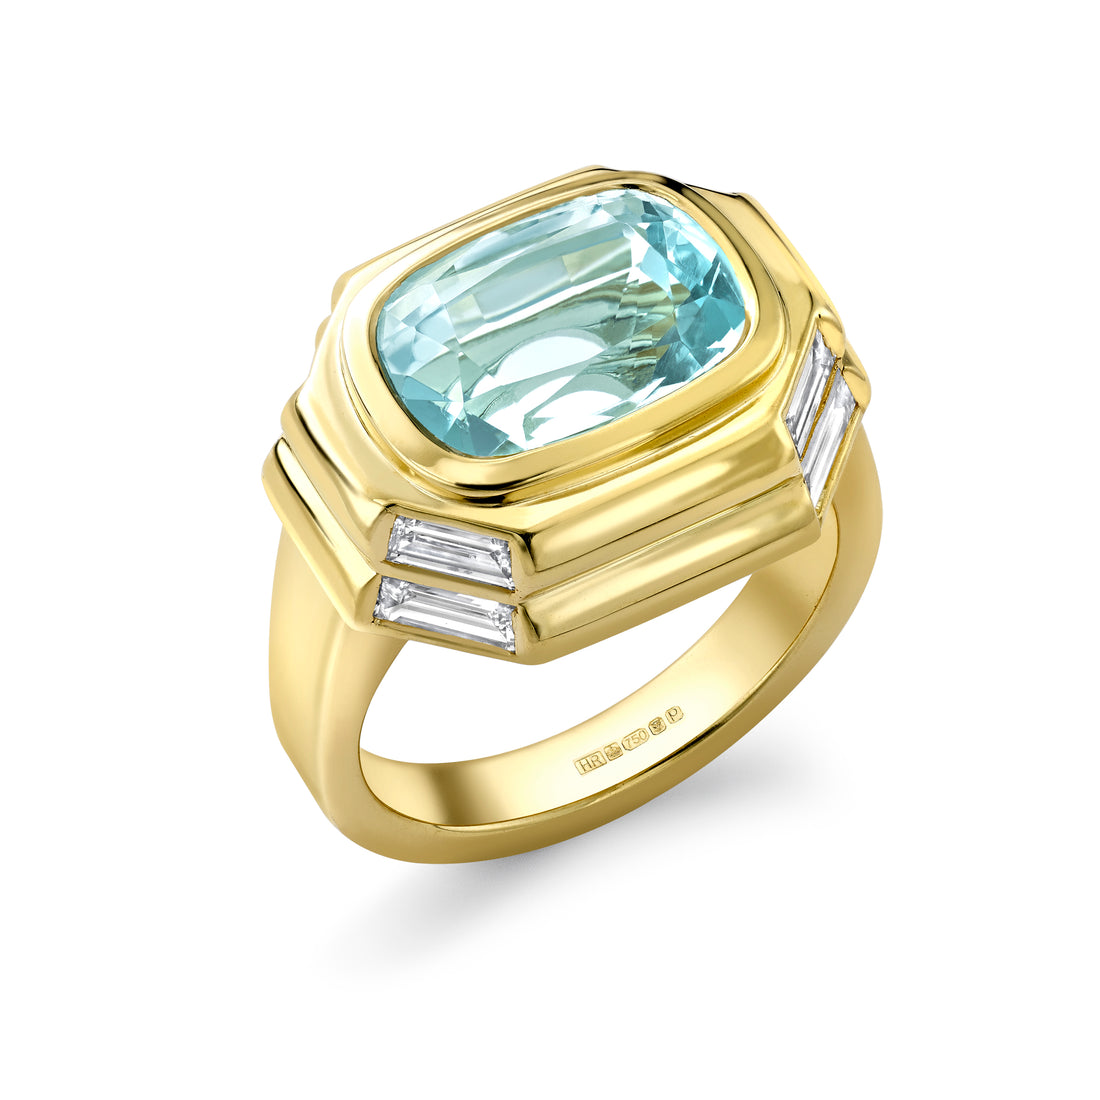  Aquamarine & Diamond Ring by Hattie Rickards | The Cut London